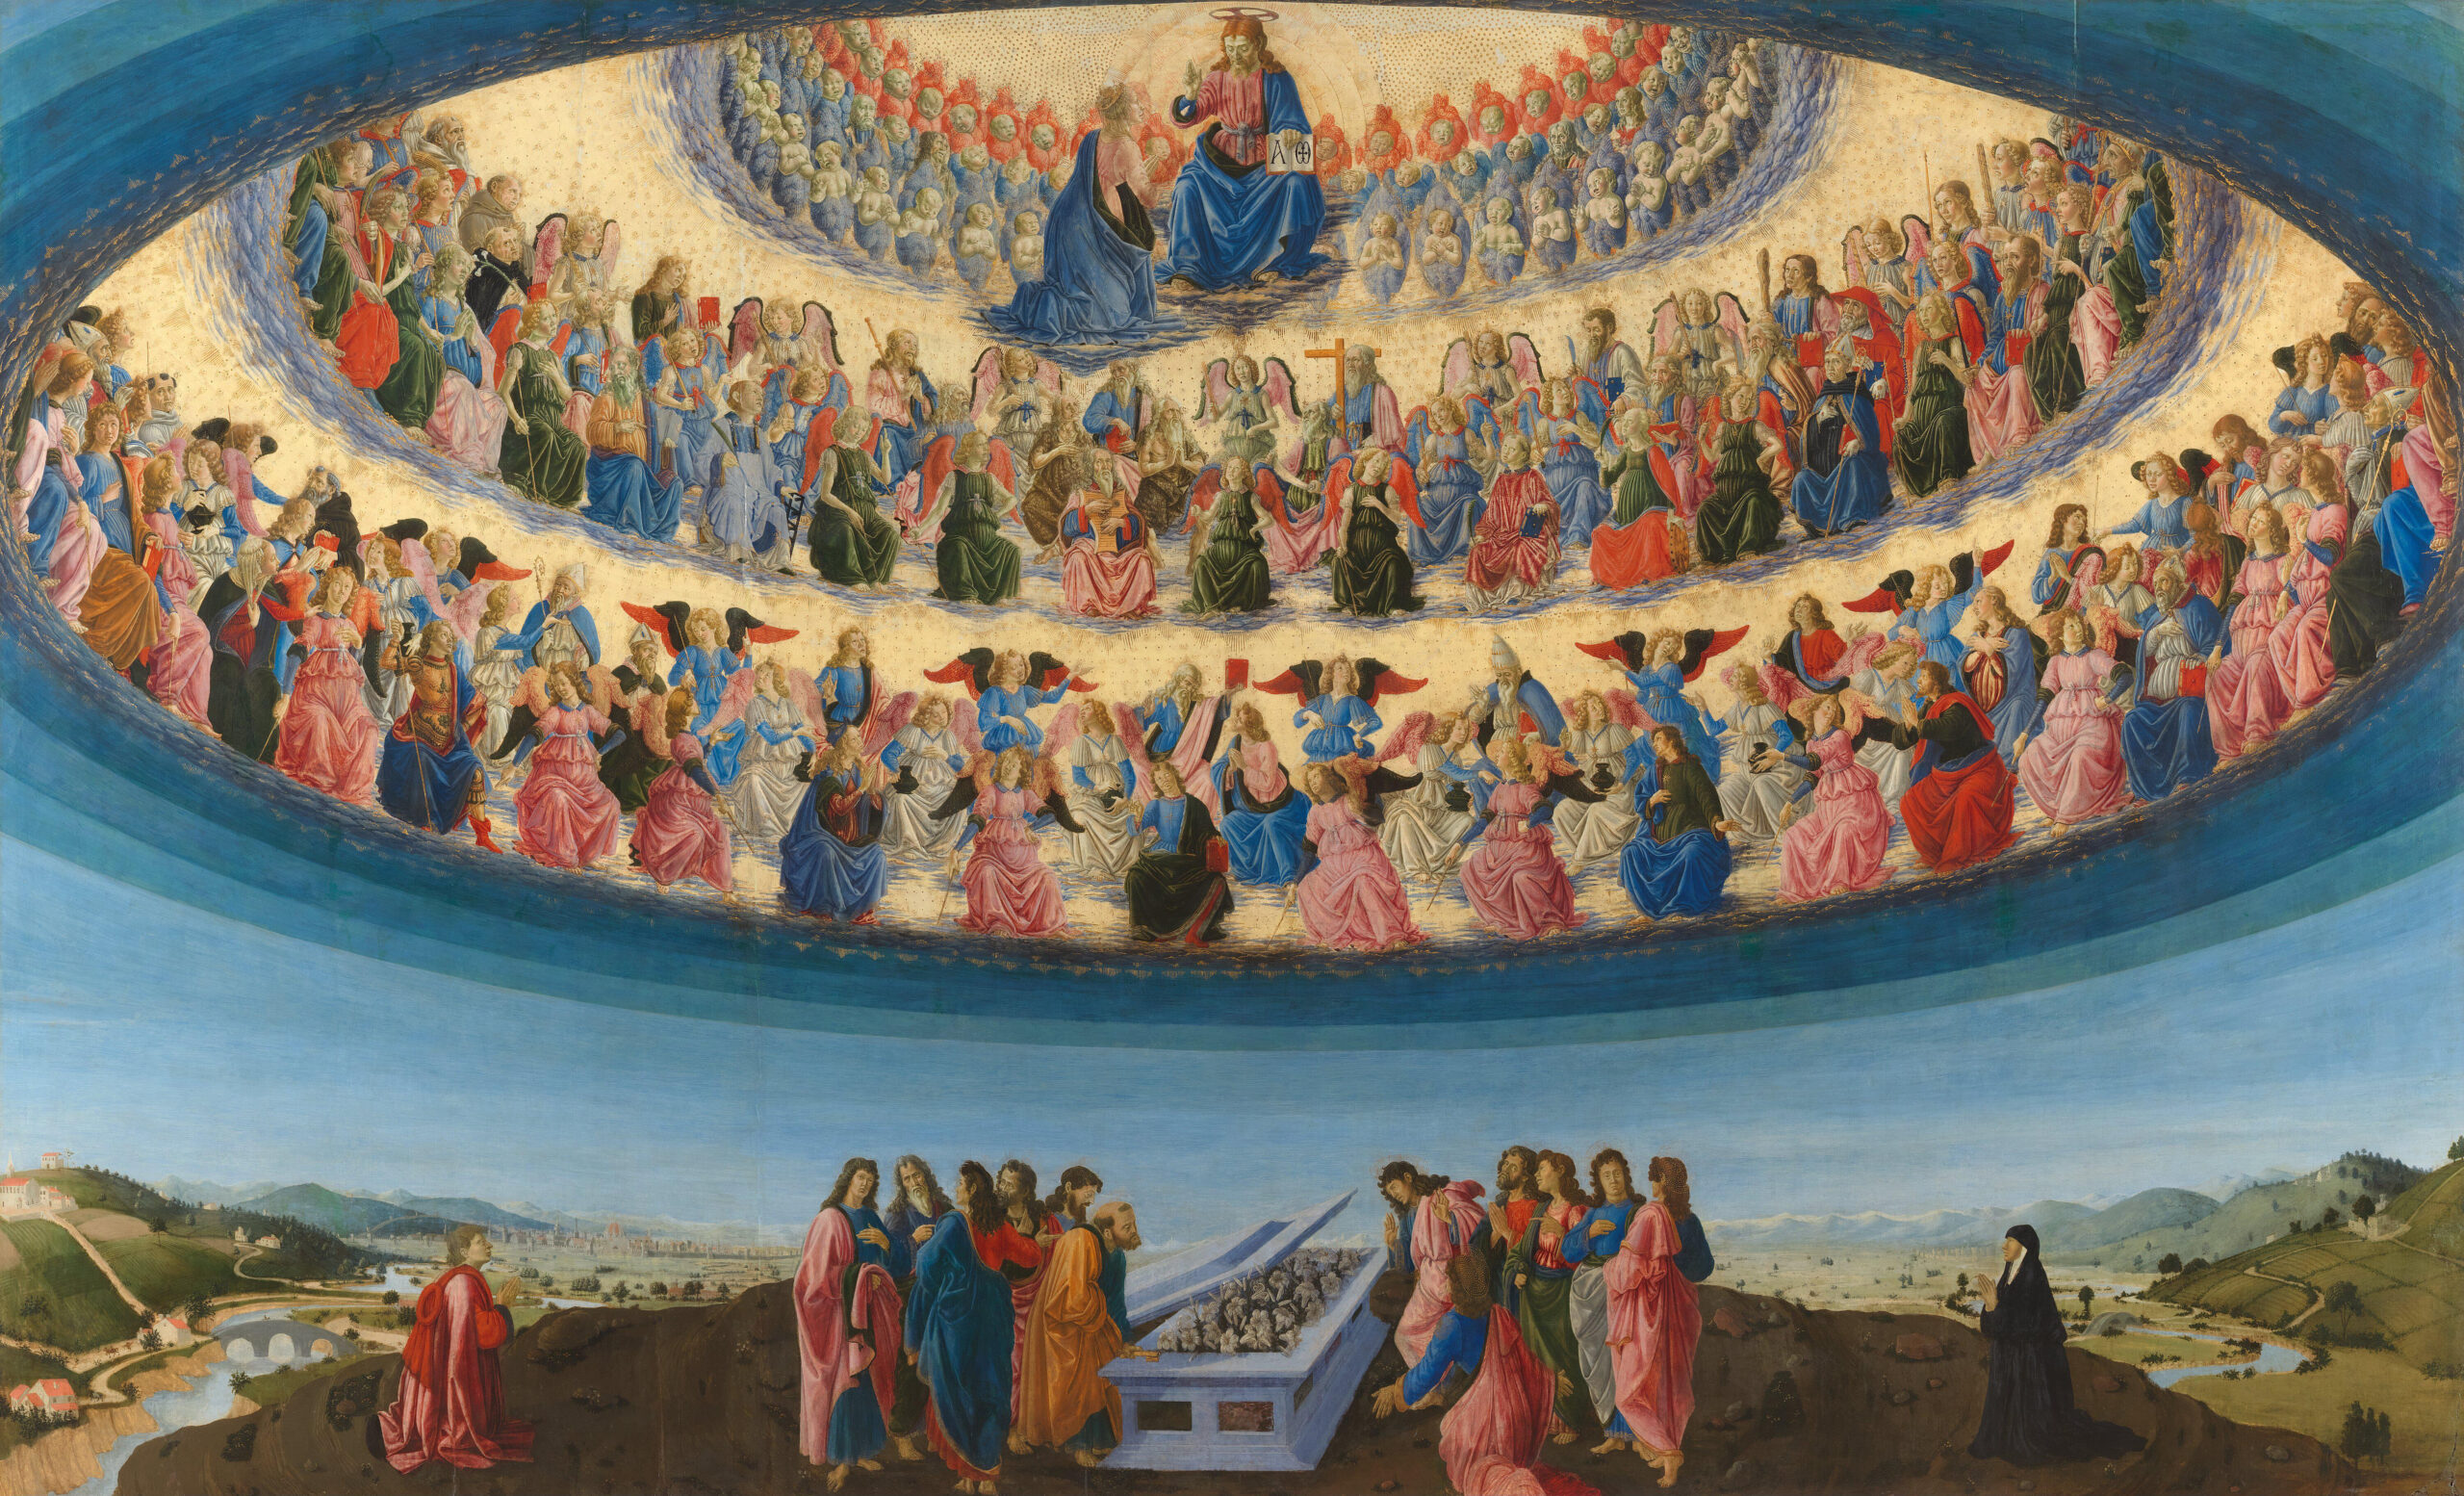 The Assumption of the Virgin by Francesco Botticini